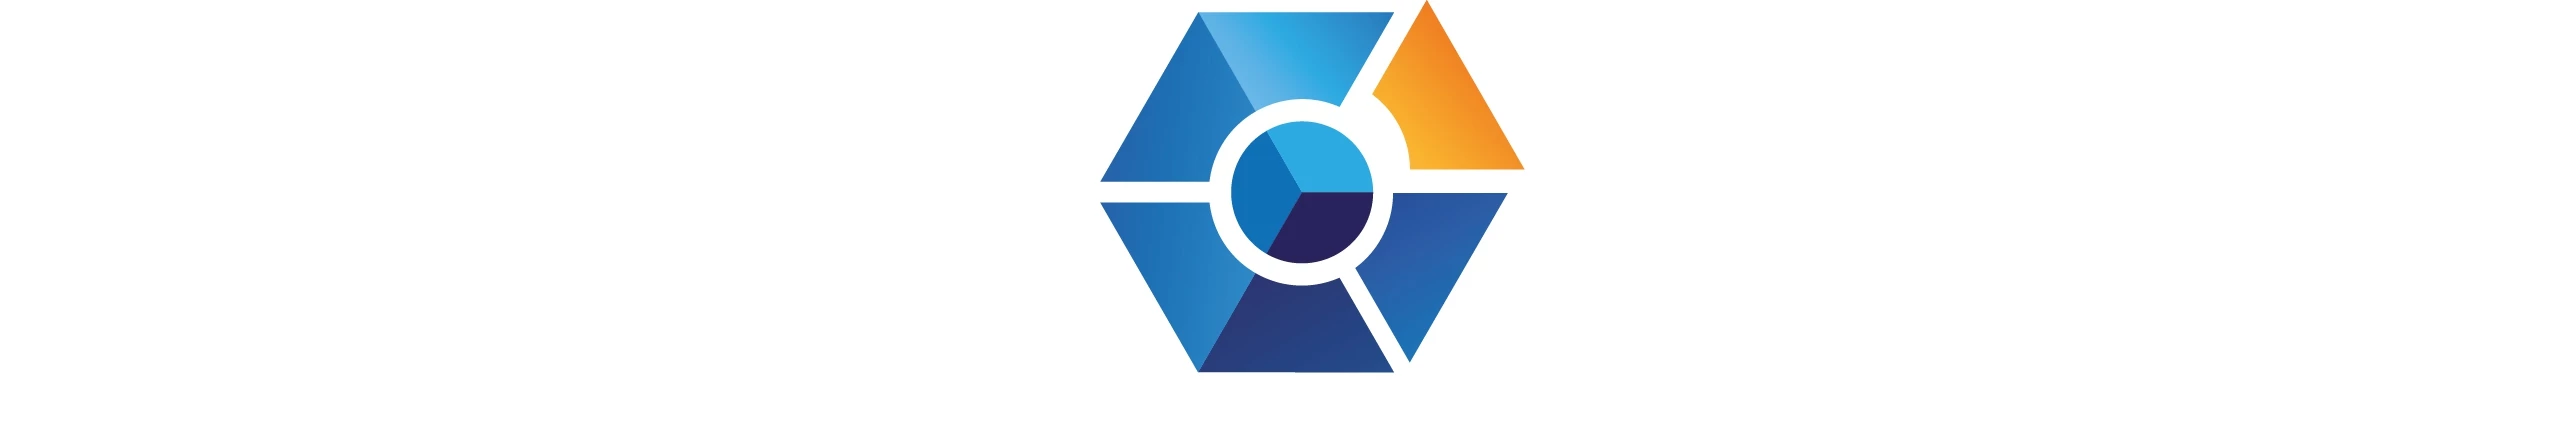 Concept Life Science's company logo